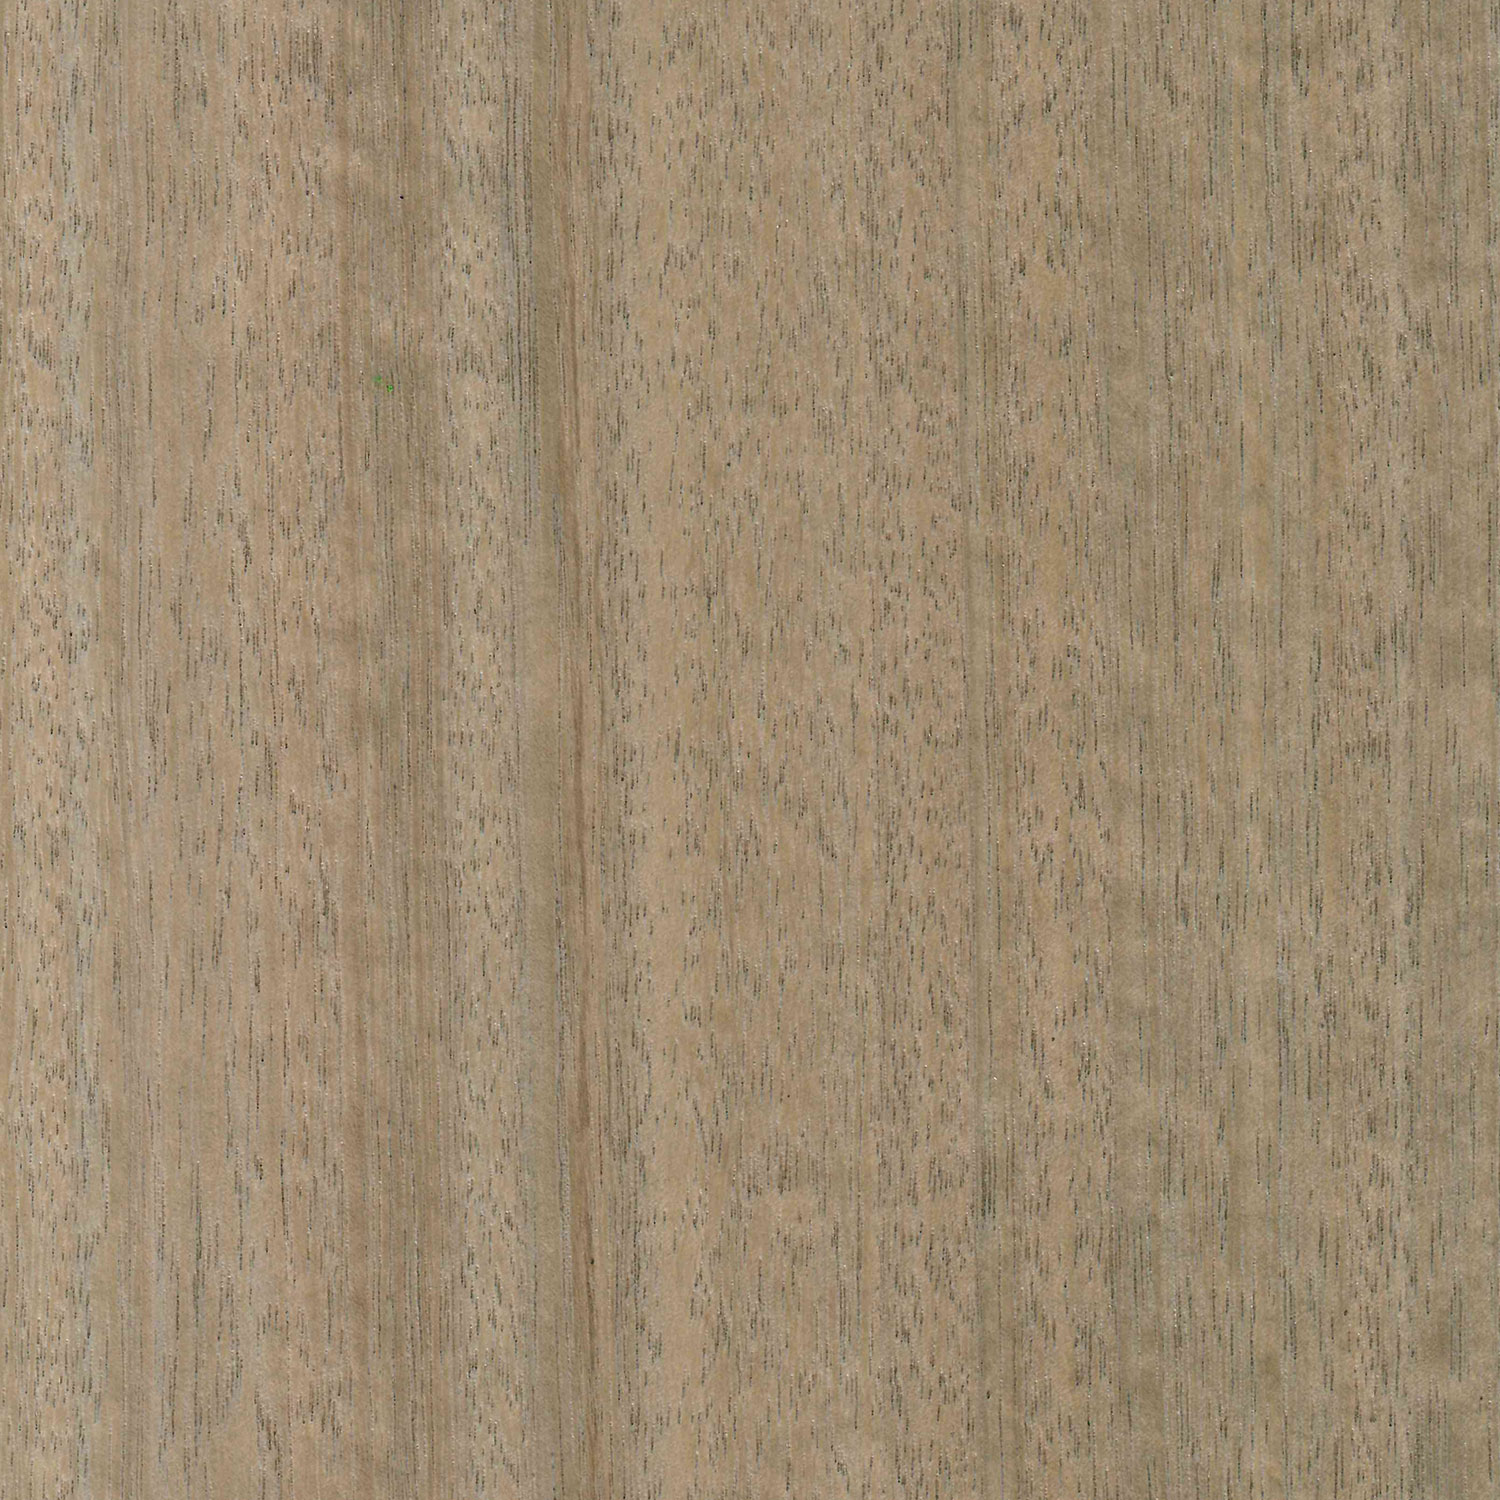 Wood species Eucalyptus Stone